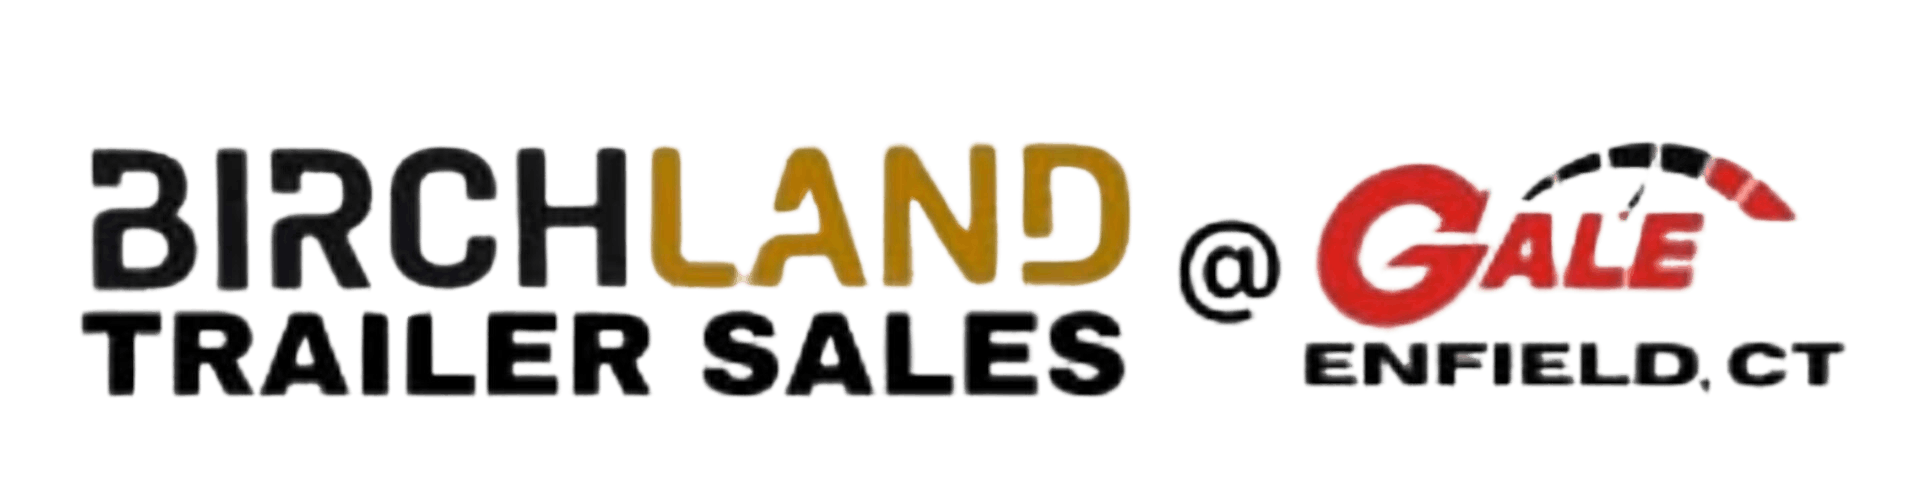 Birchland trailer sales @ Gale Toyota logos.